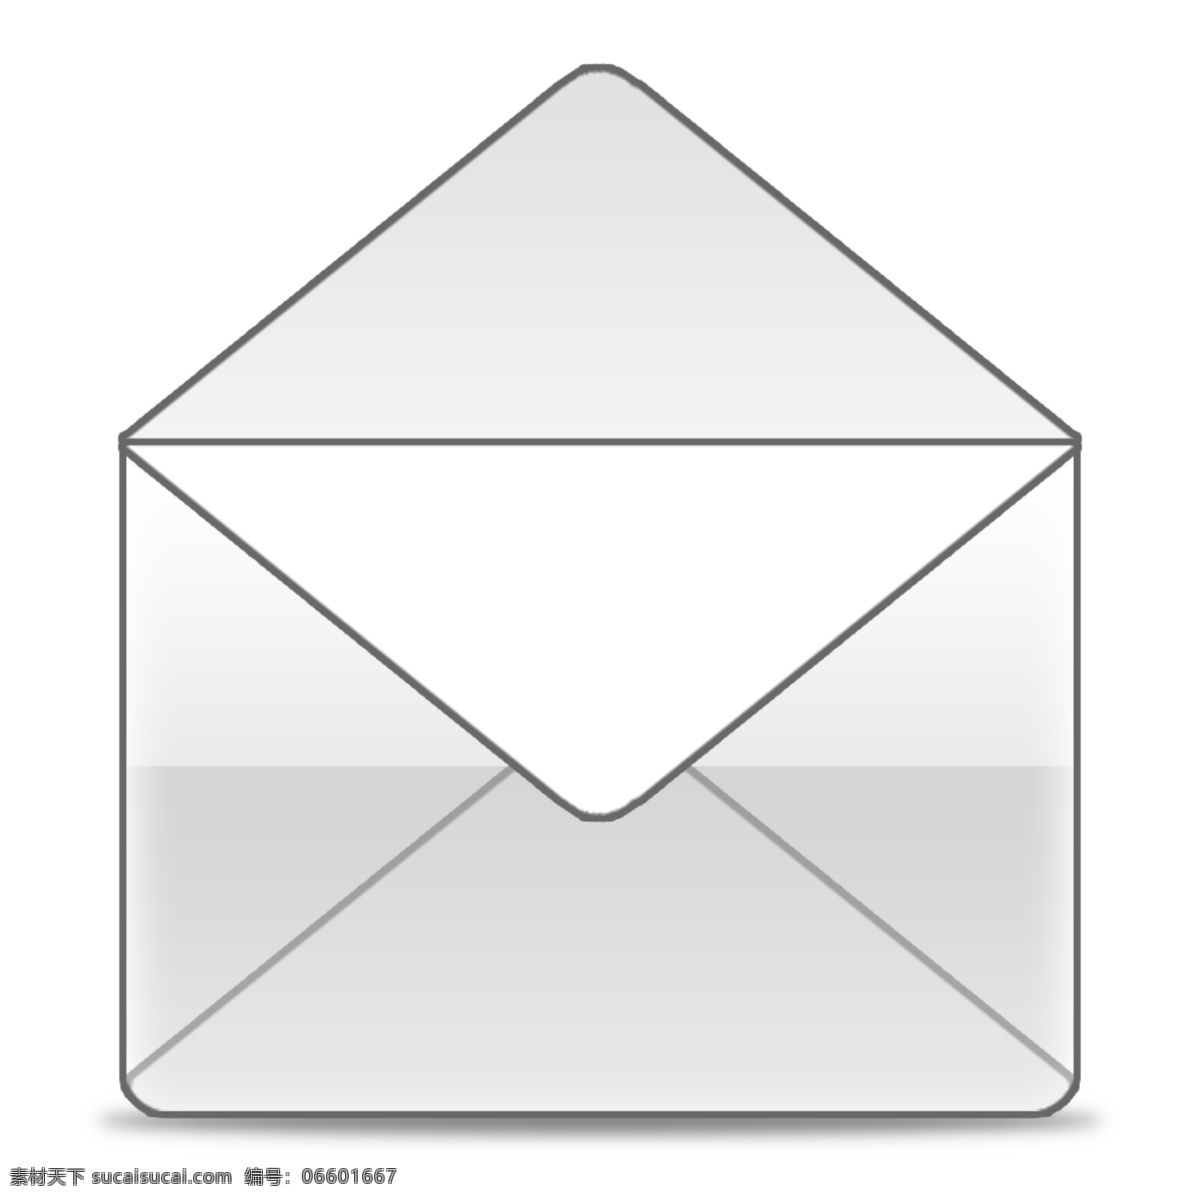 拆开 邮箱 邮件 icon 图标 图标设计 icon设计 icon图标 网页图标 邮箱图标 邮箱icon 邮件图标 邮件icon 邮箱图标设计